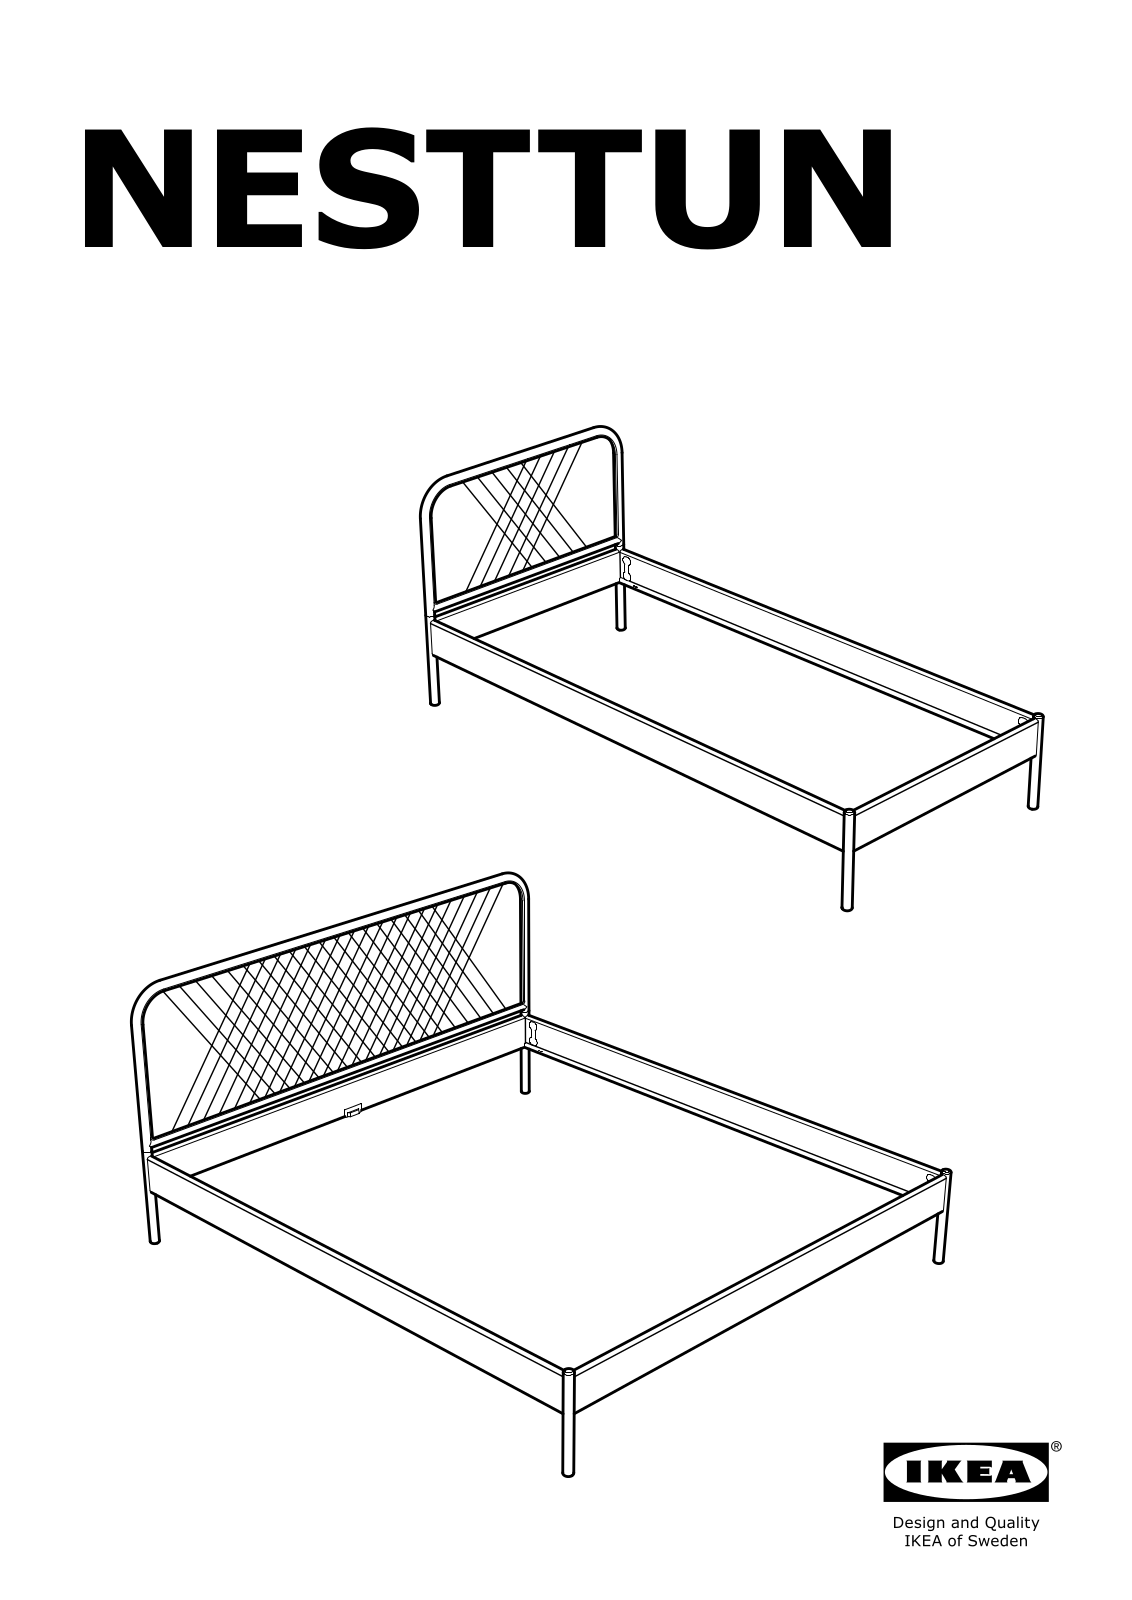 IKEA NESTTUN Bed frame Assembly Instruction